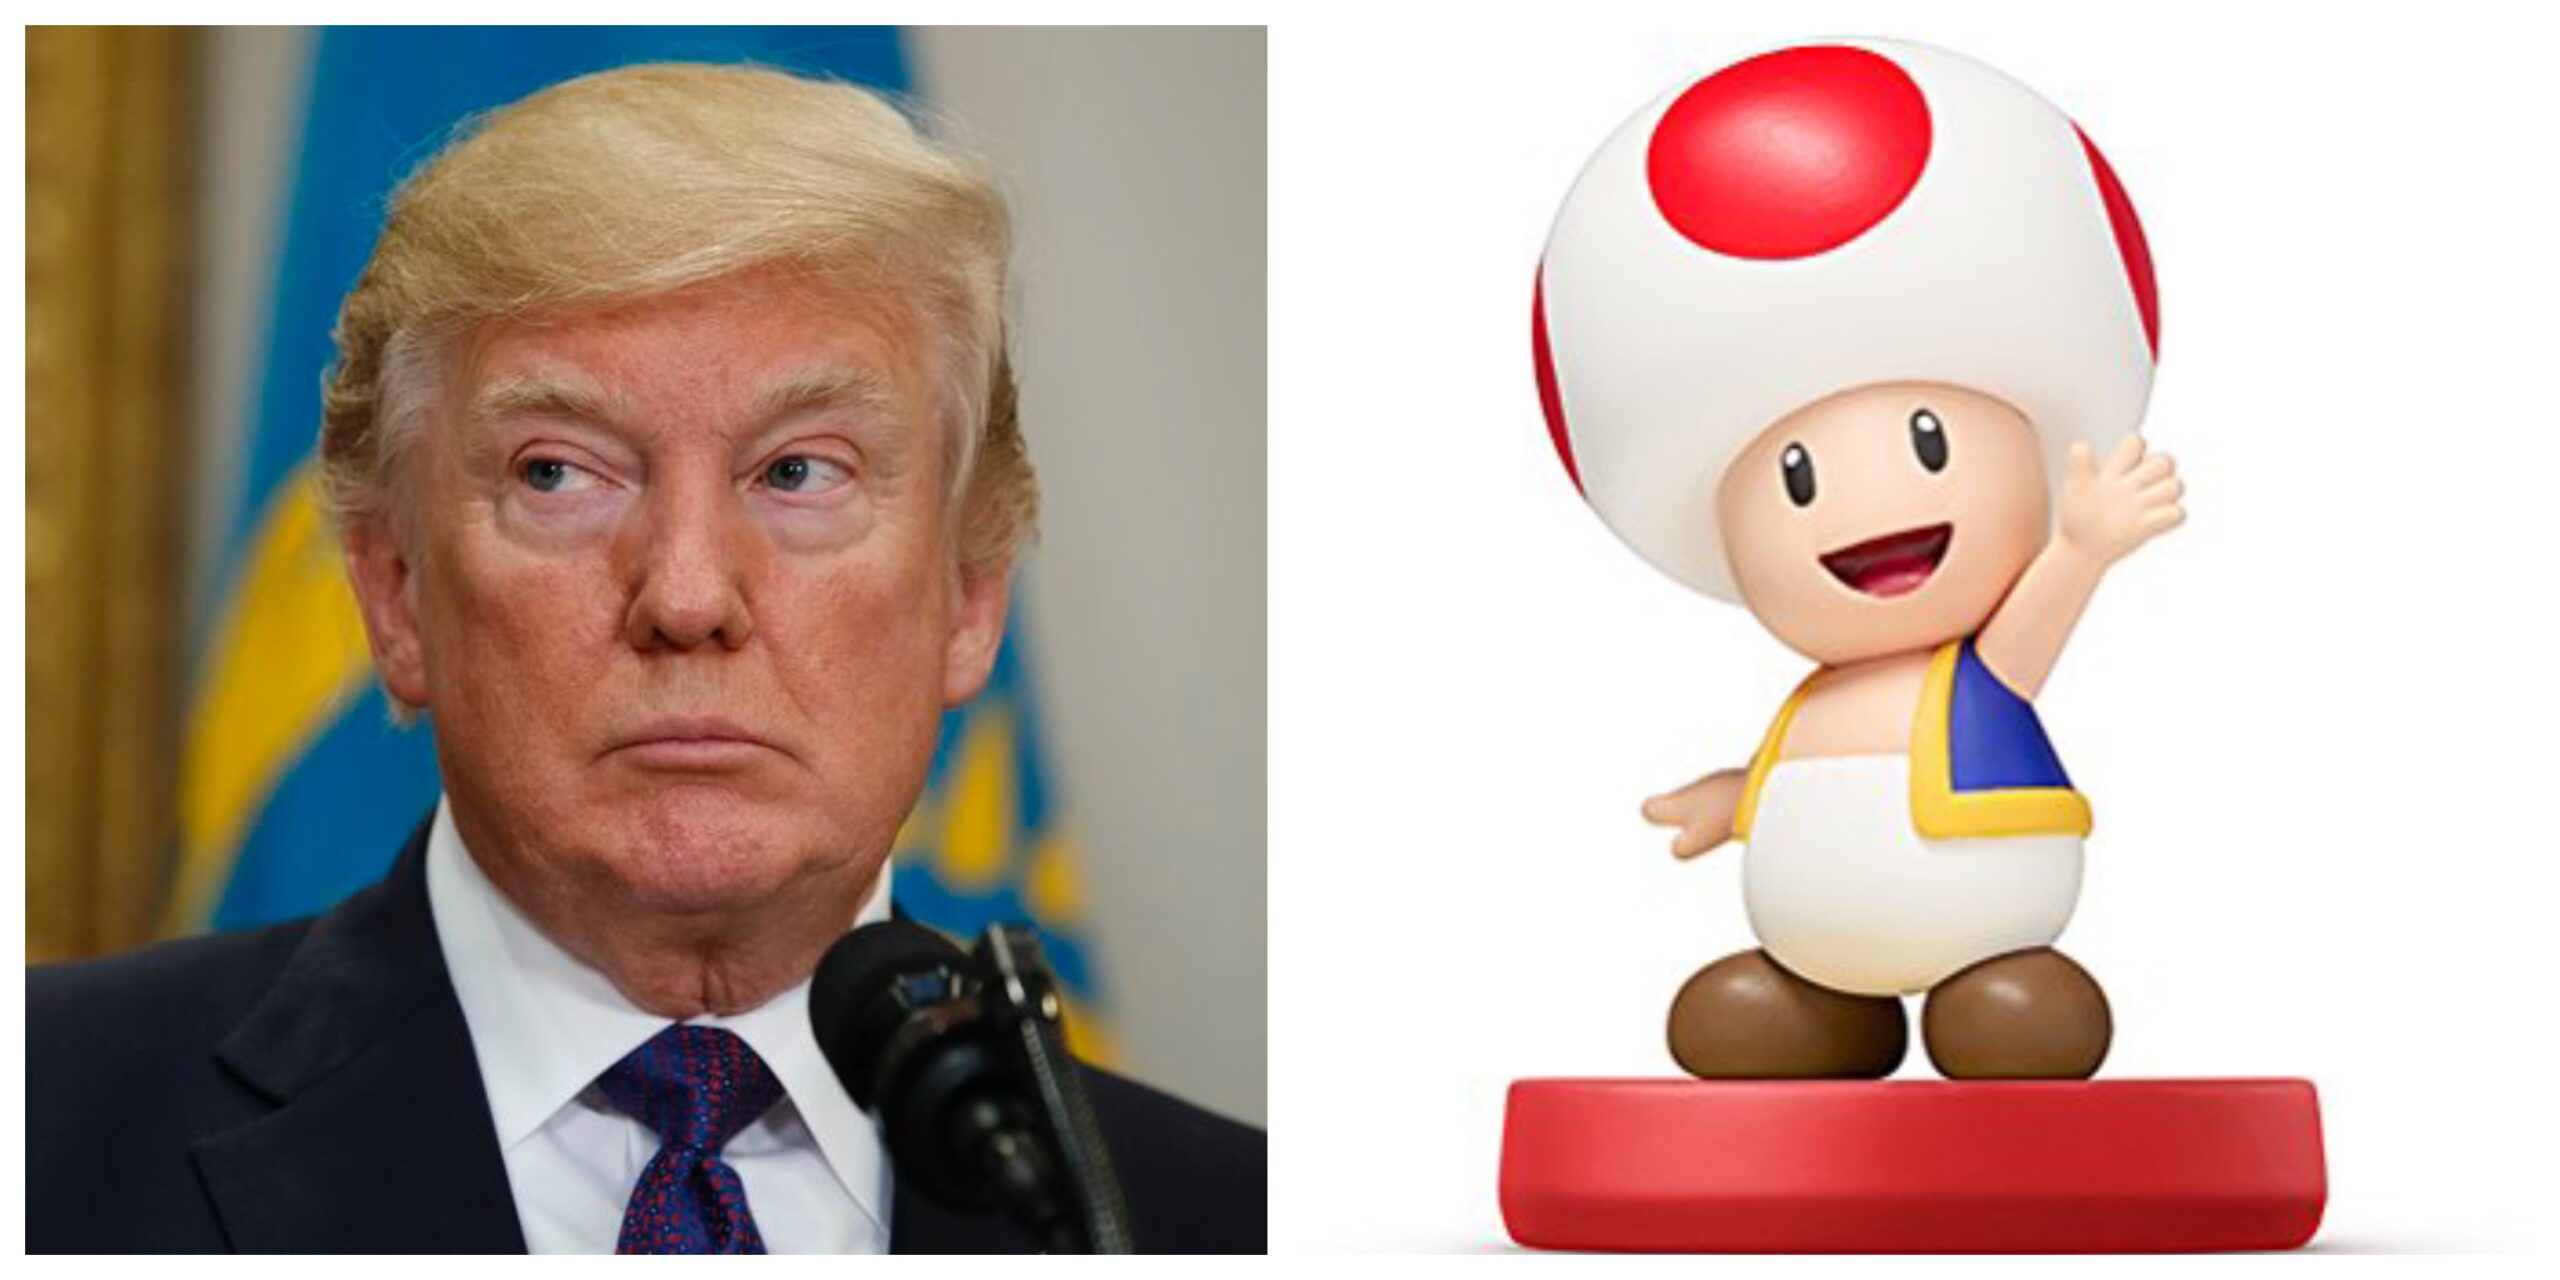 Stormy Daniels Said Donald Trump's Manhood Looks Like Toad From Mario Kart